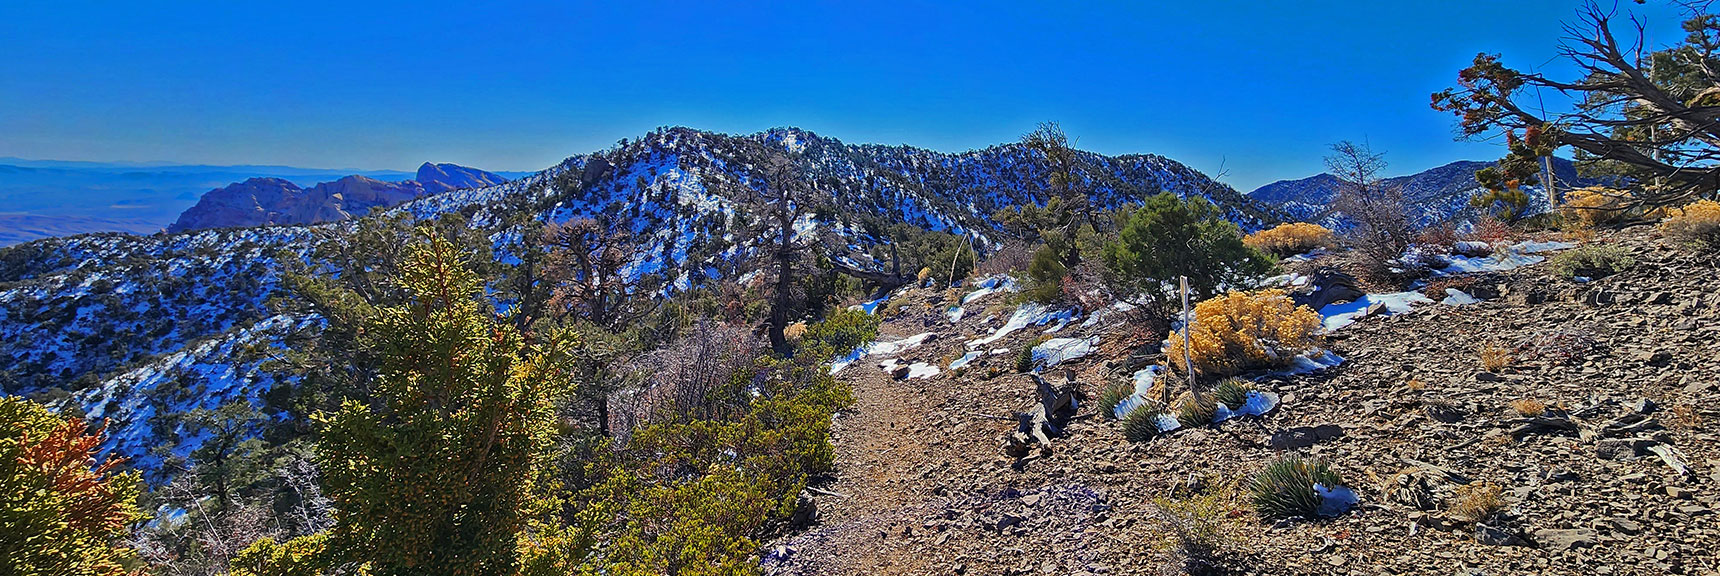 Still on the Bridge Mountain Trail, Approaching the Ridge Ahead to the South | Mid Upper Crest Ridgeline | Rainbow Mountain Wilderness, Nevada